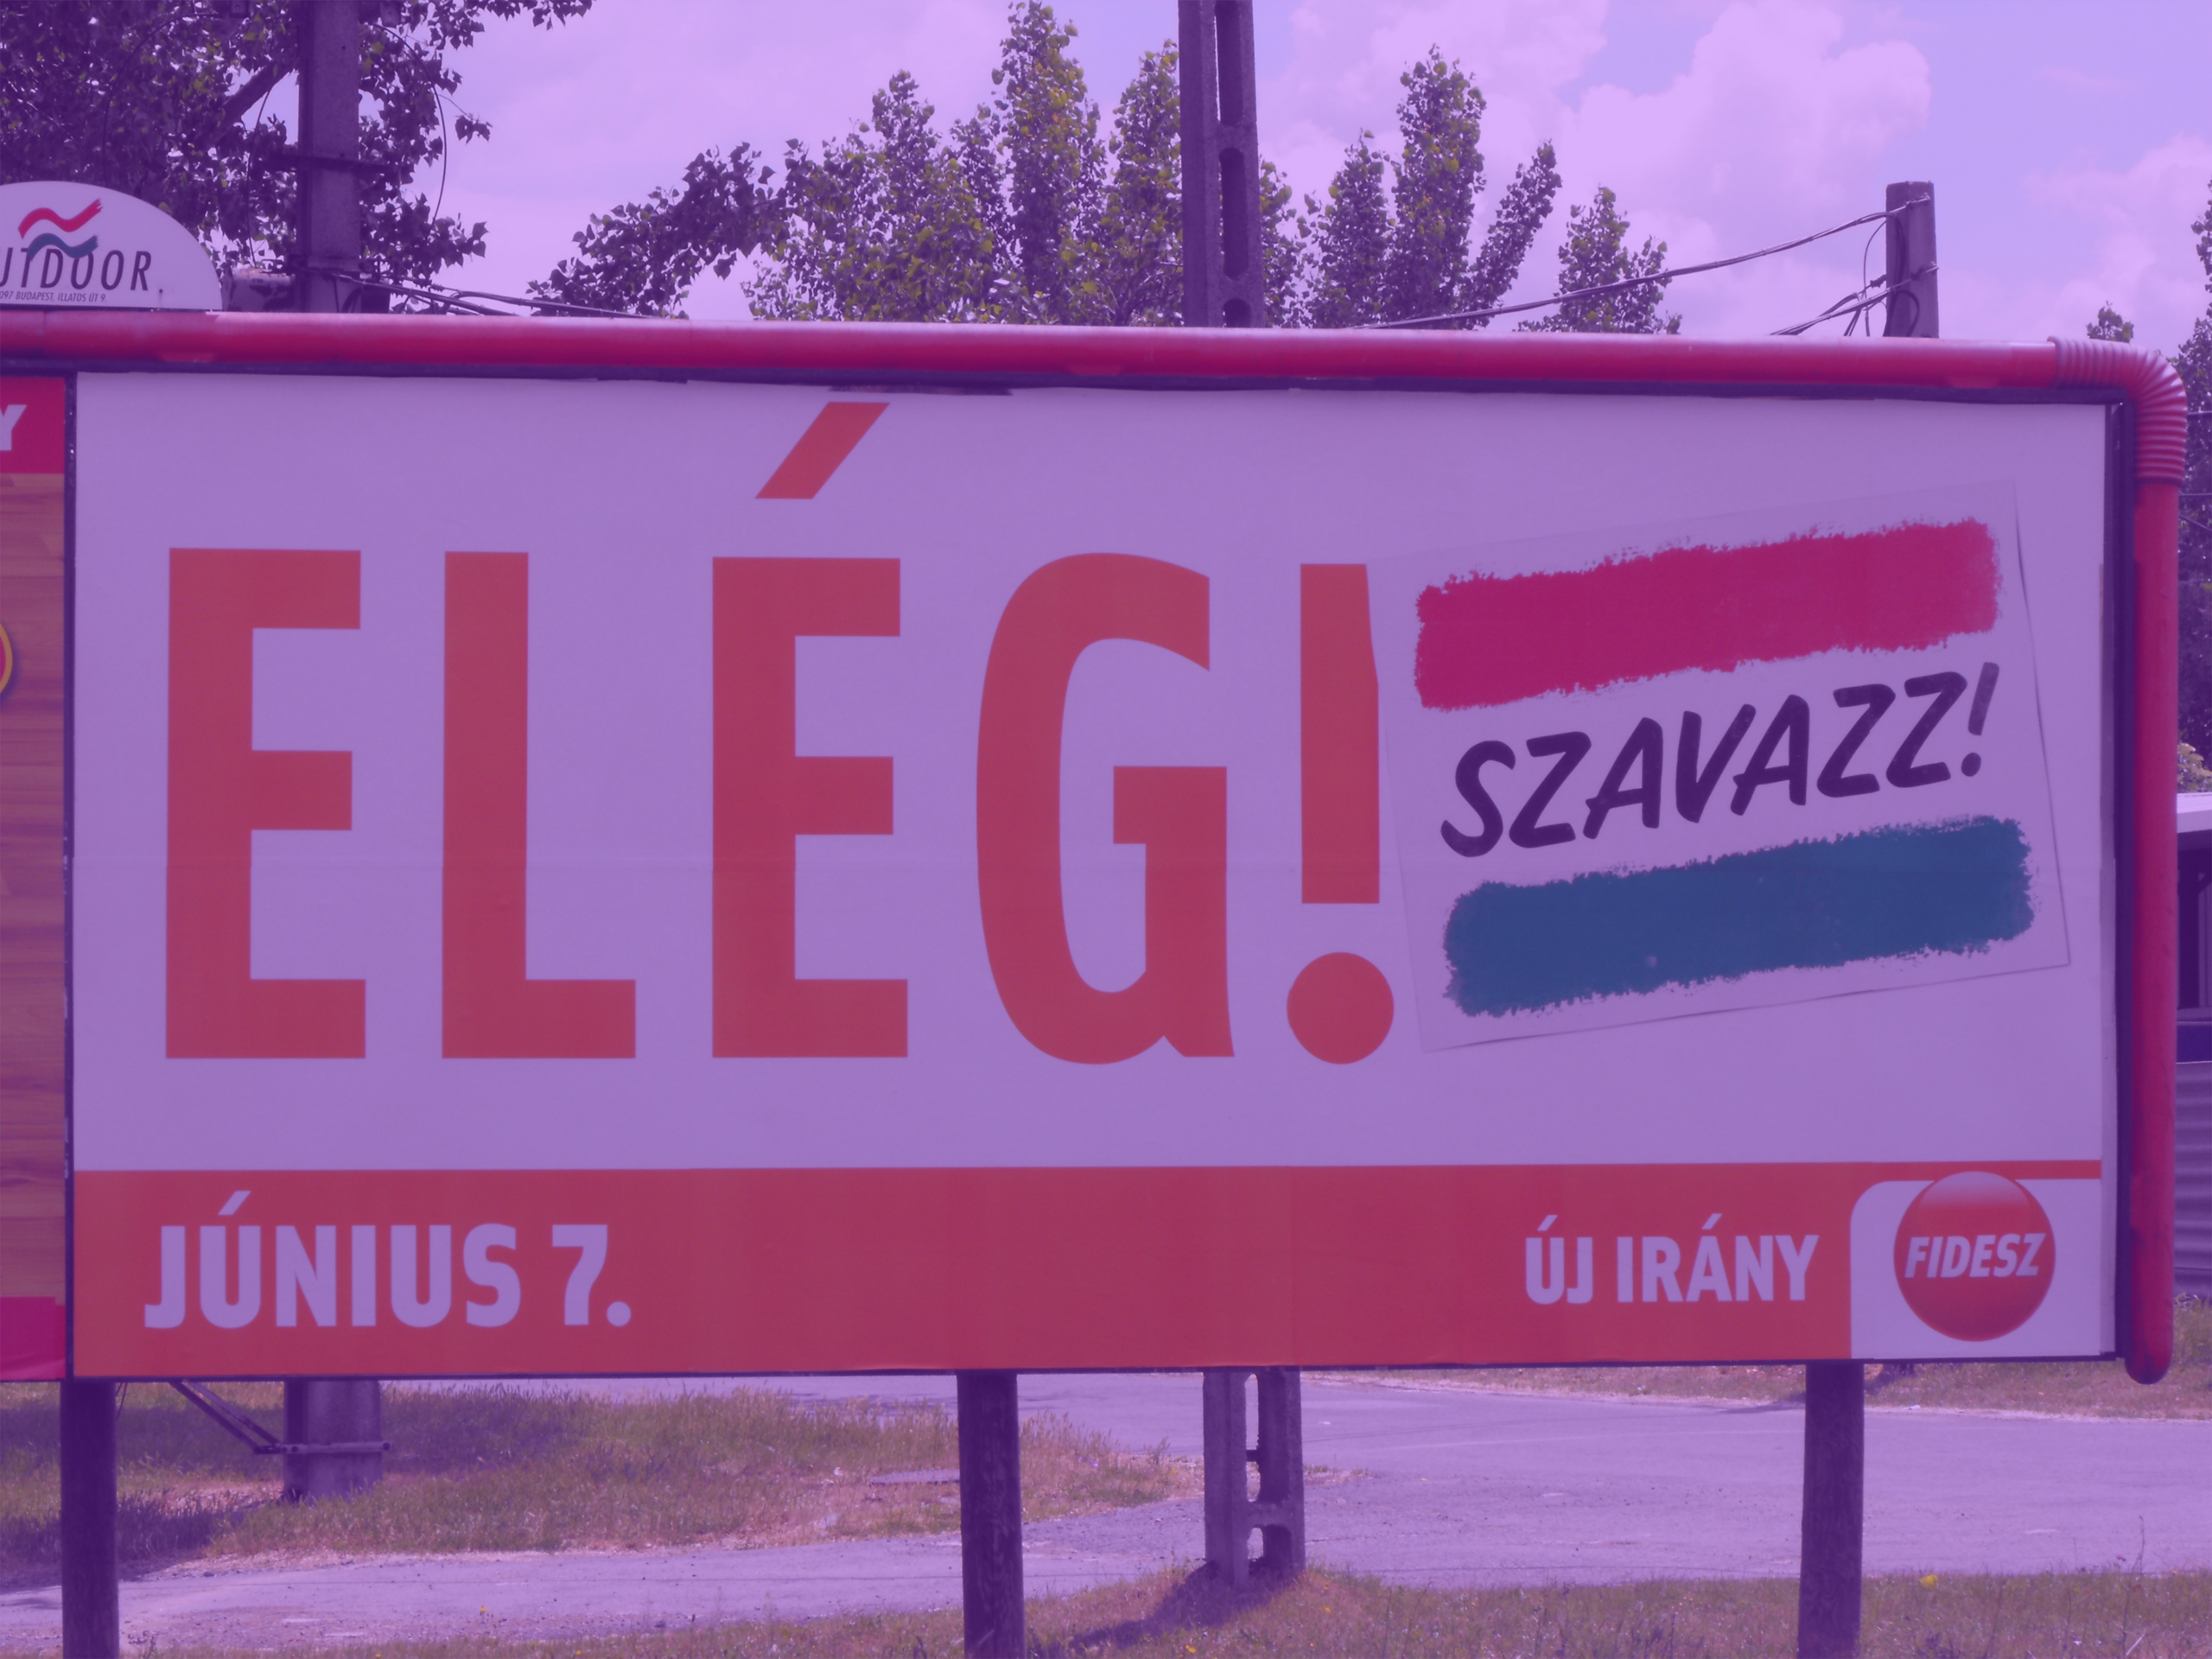 András Bíró-Nagy – Orbán’s political jackpot: migration and the Hungarian electorate